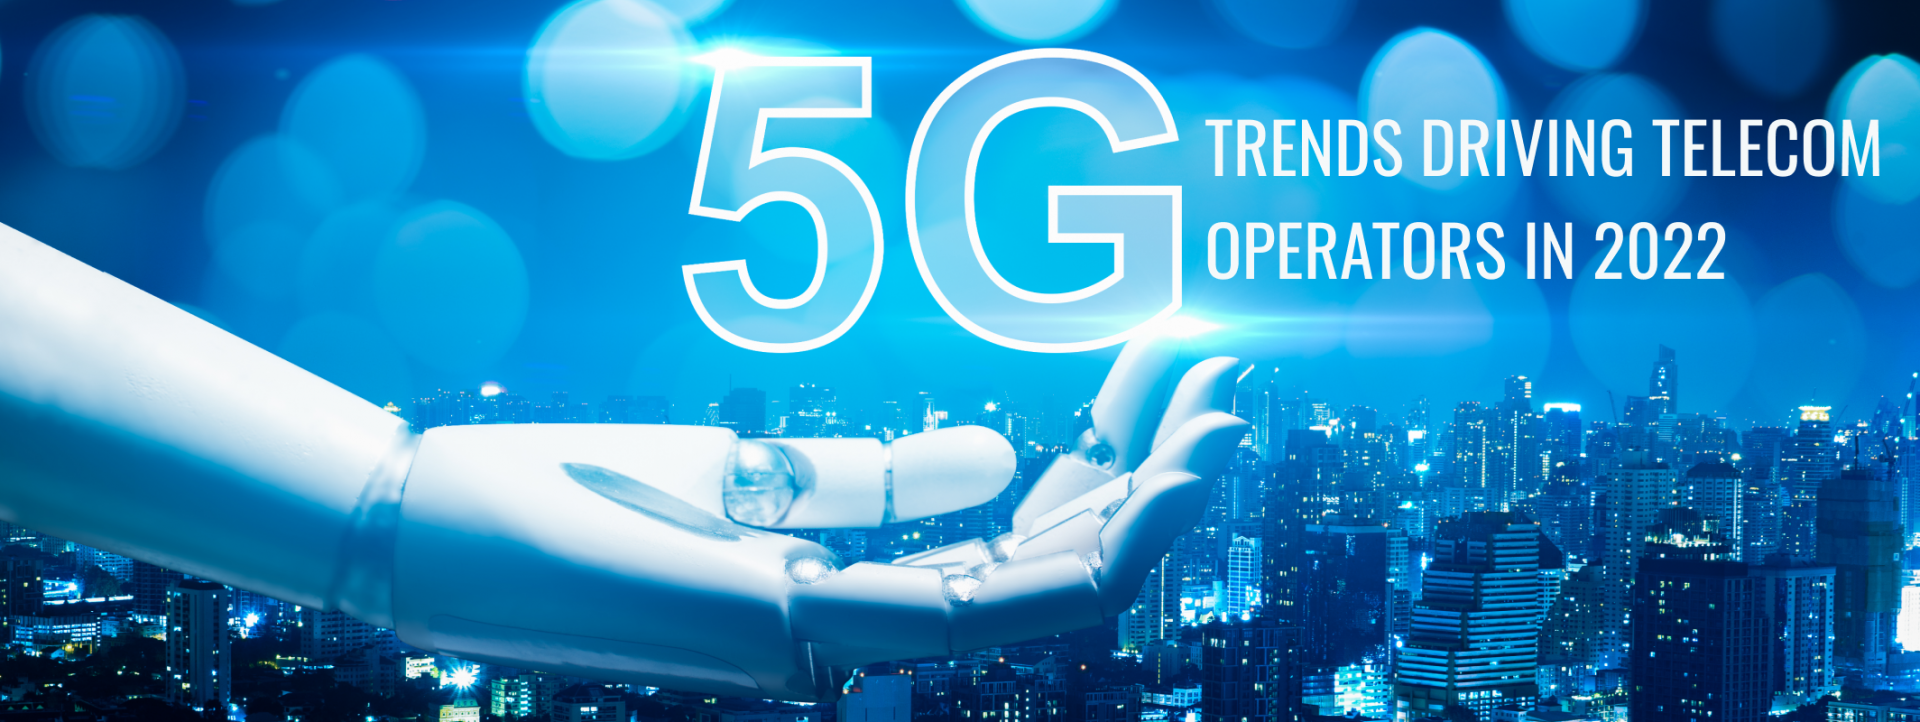 5G trends driving telecom operators in 2022